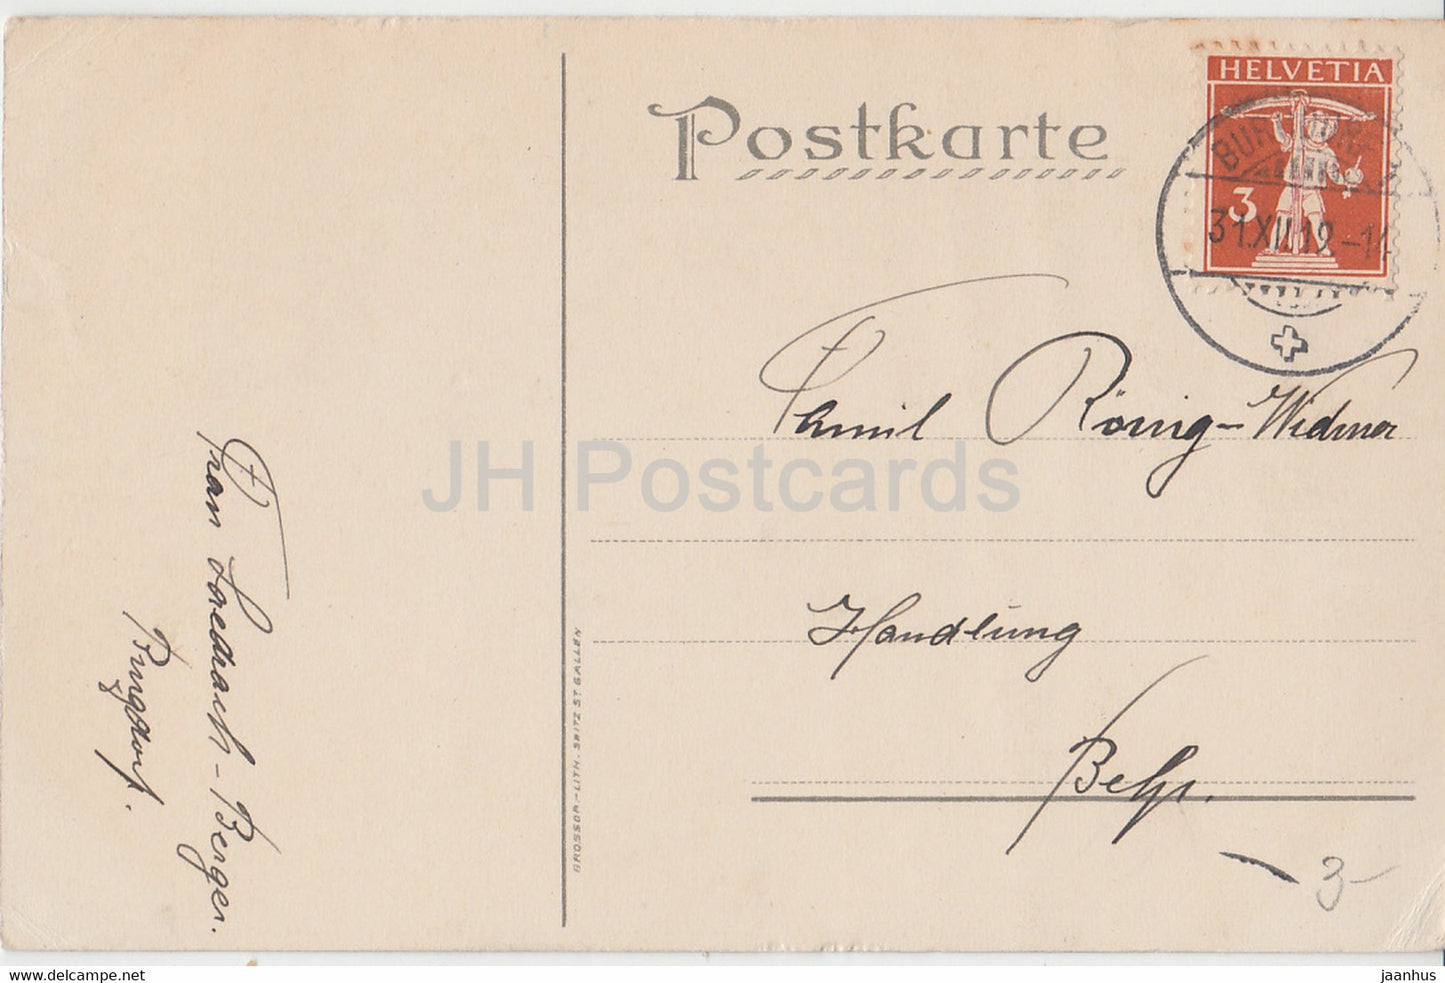 Carte de vœux du Nouvel An - Herzlichen Gluckwunsch zum Neuen Jahre - Grossop - carte postale ancienne - 1919 - Suisse - utilisé